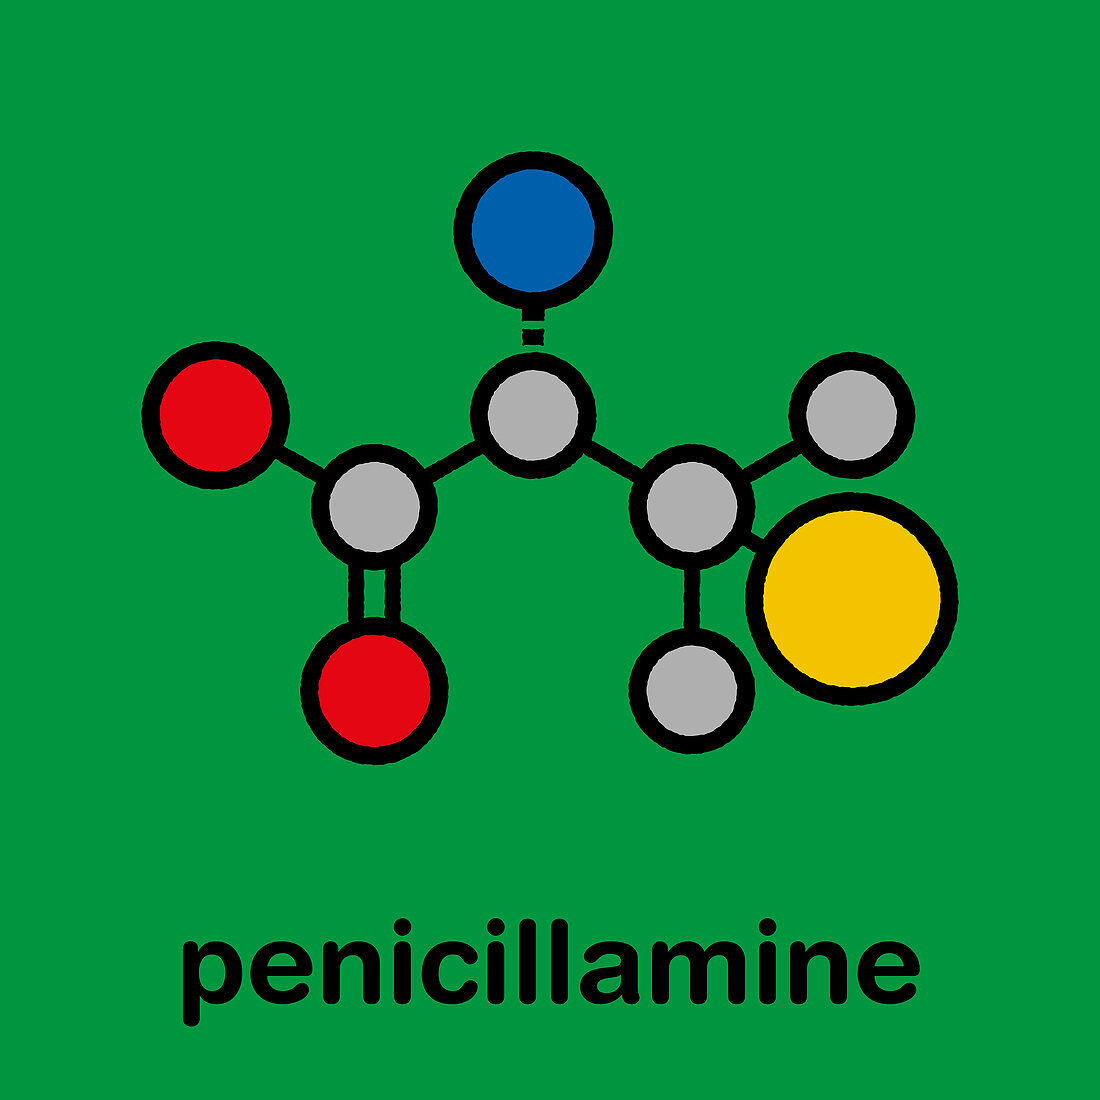 Penicillamine drug molecule, illustration